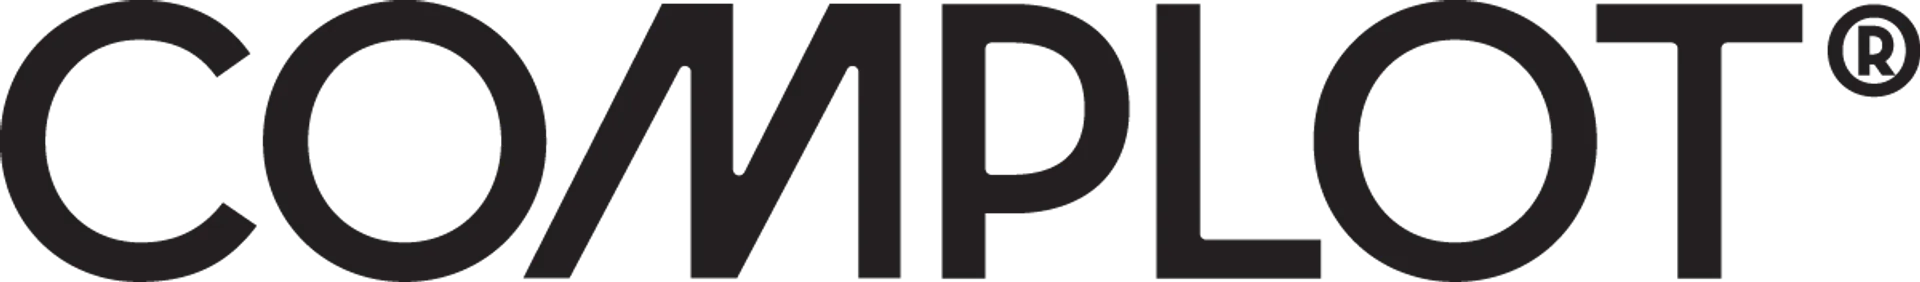 COMPLOT logo